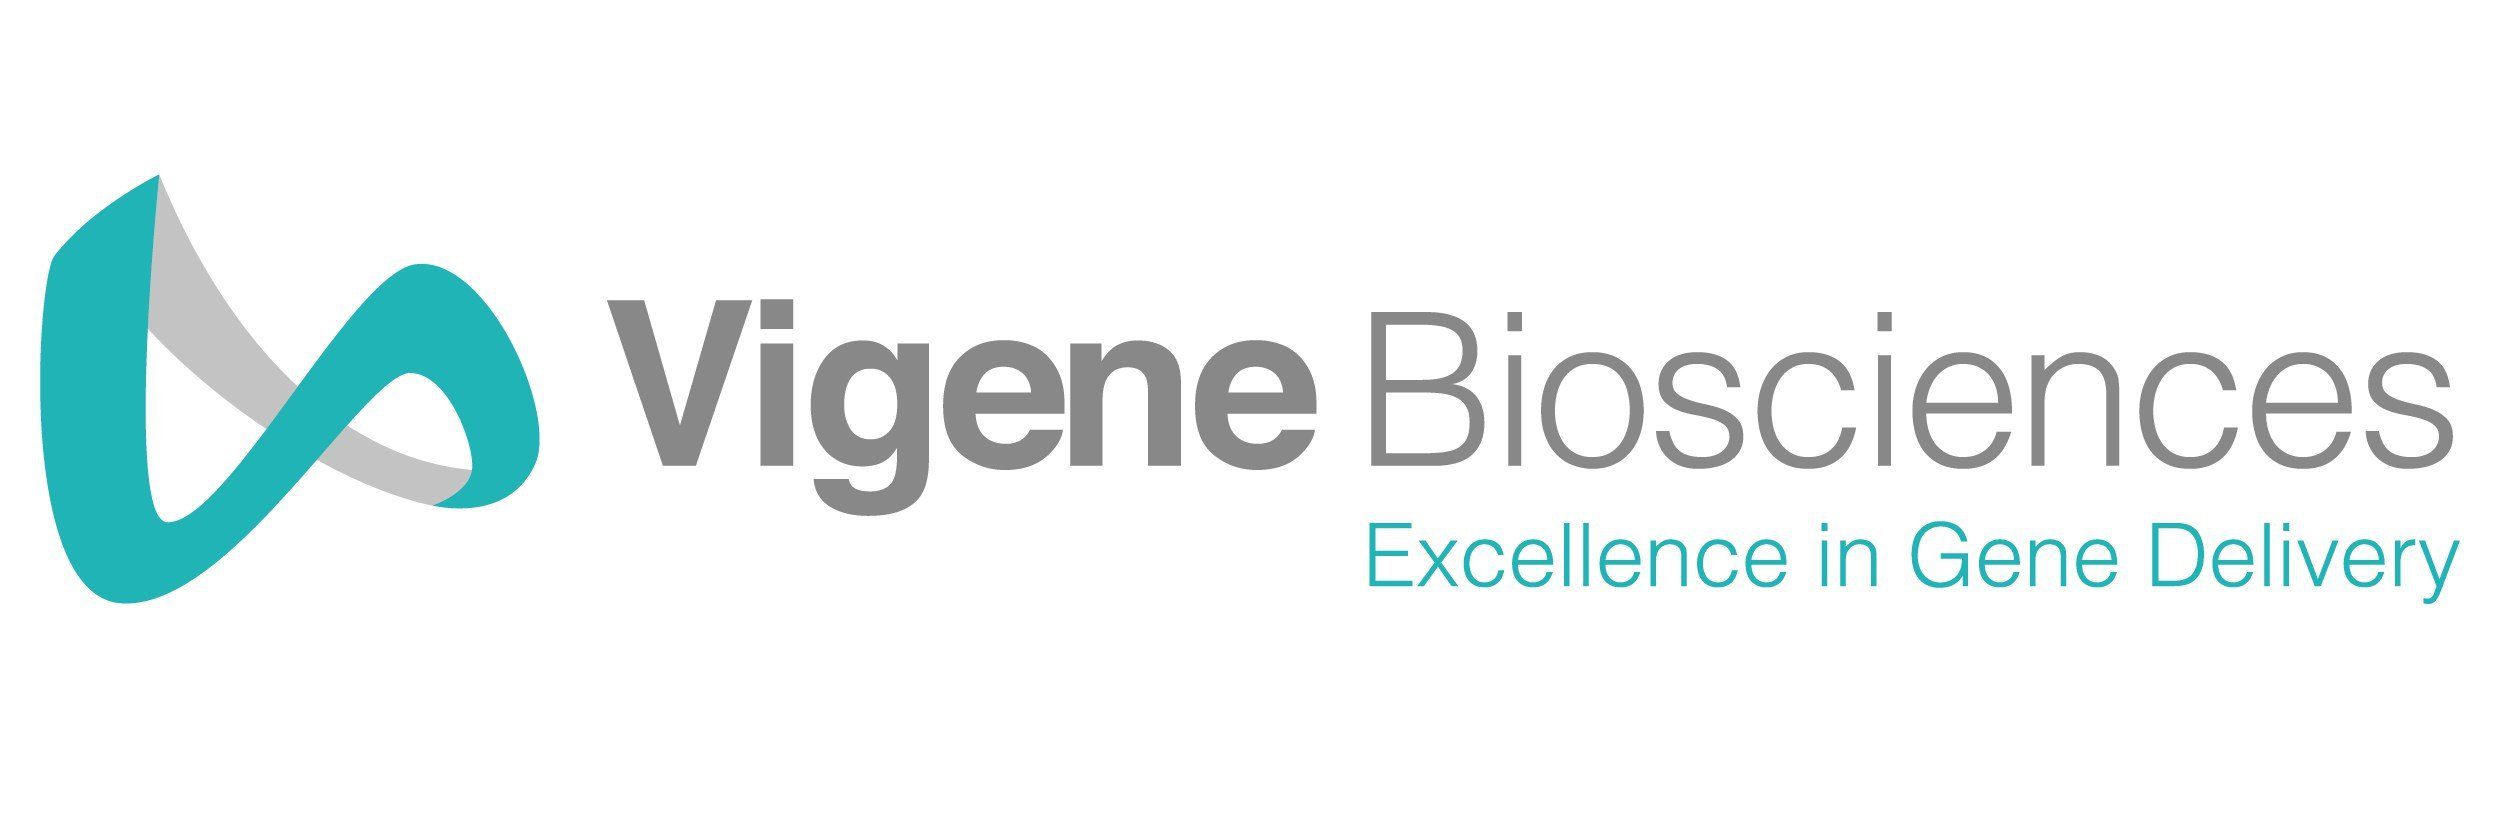 Vigene Biosciences Expansion 245 New Jobs